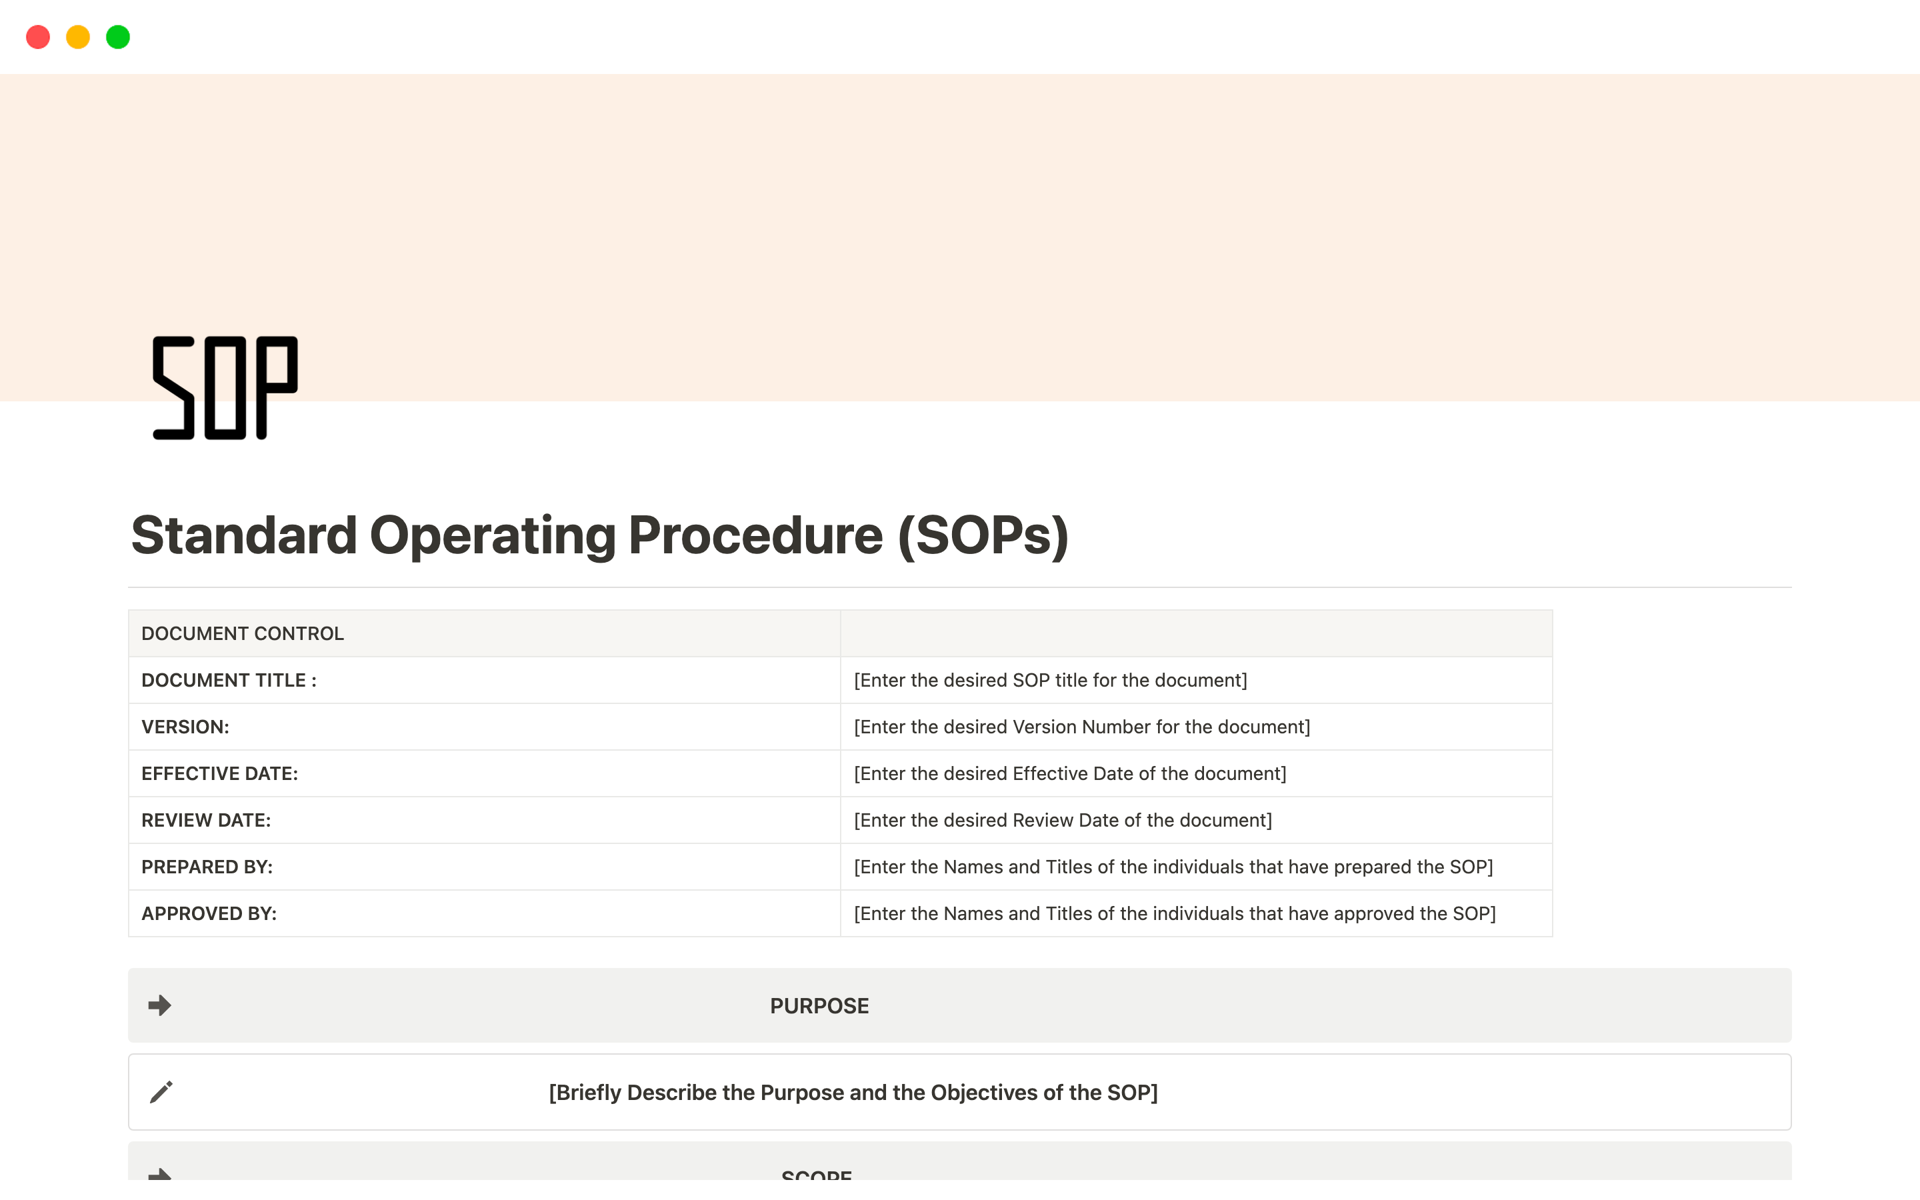 Aperçu du modèle de Standard Operating Procedure (SOPs)